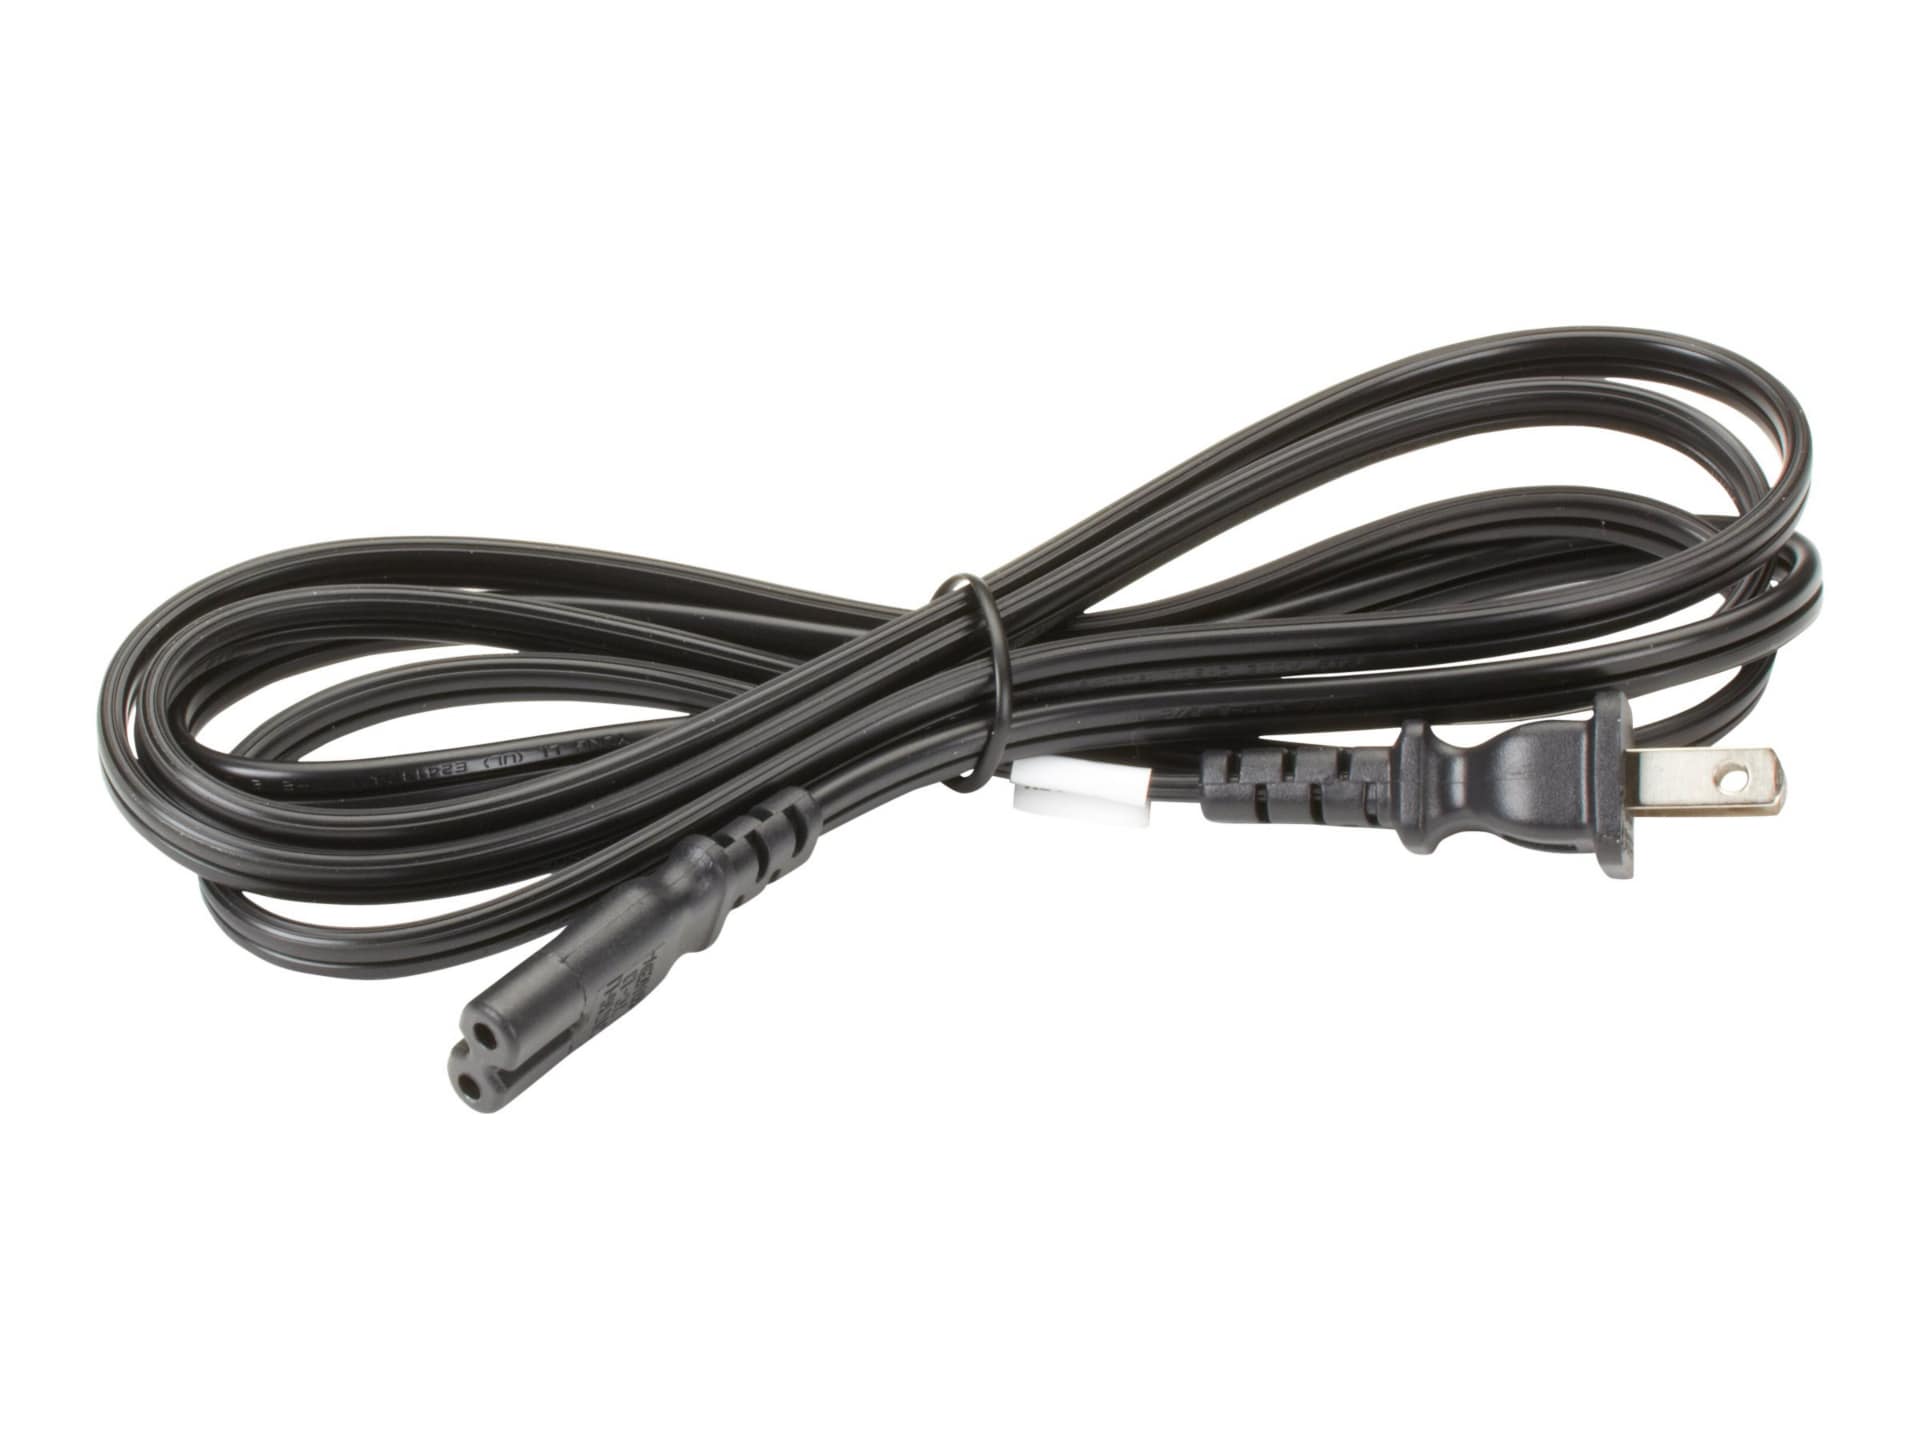 Black Box - power cable - NEMA 1-15 to IEC 60320 C7 - TAA Compliant